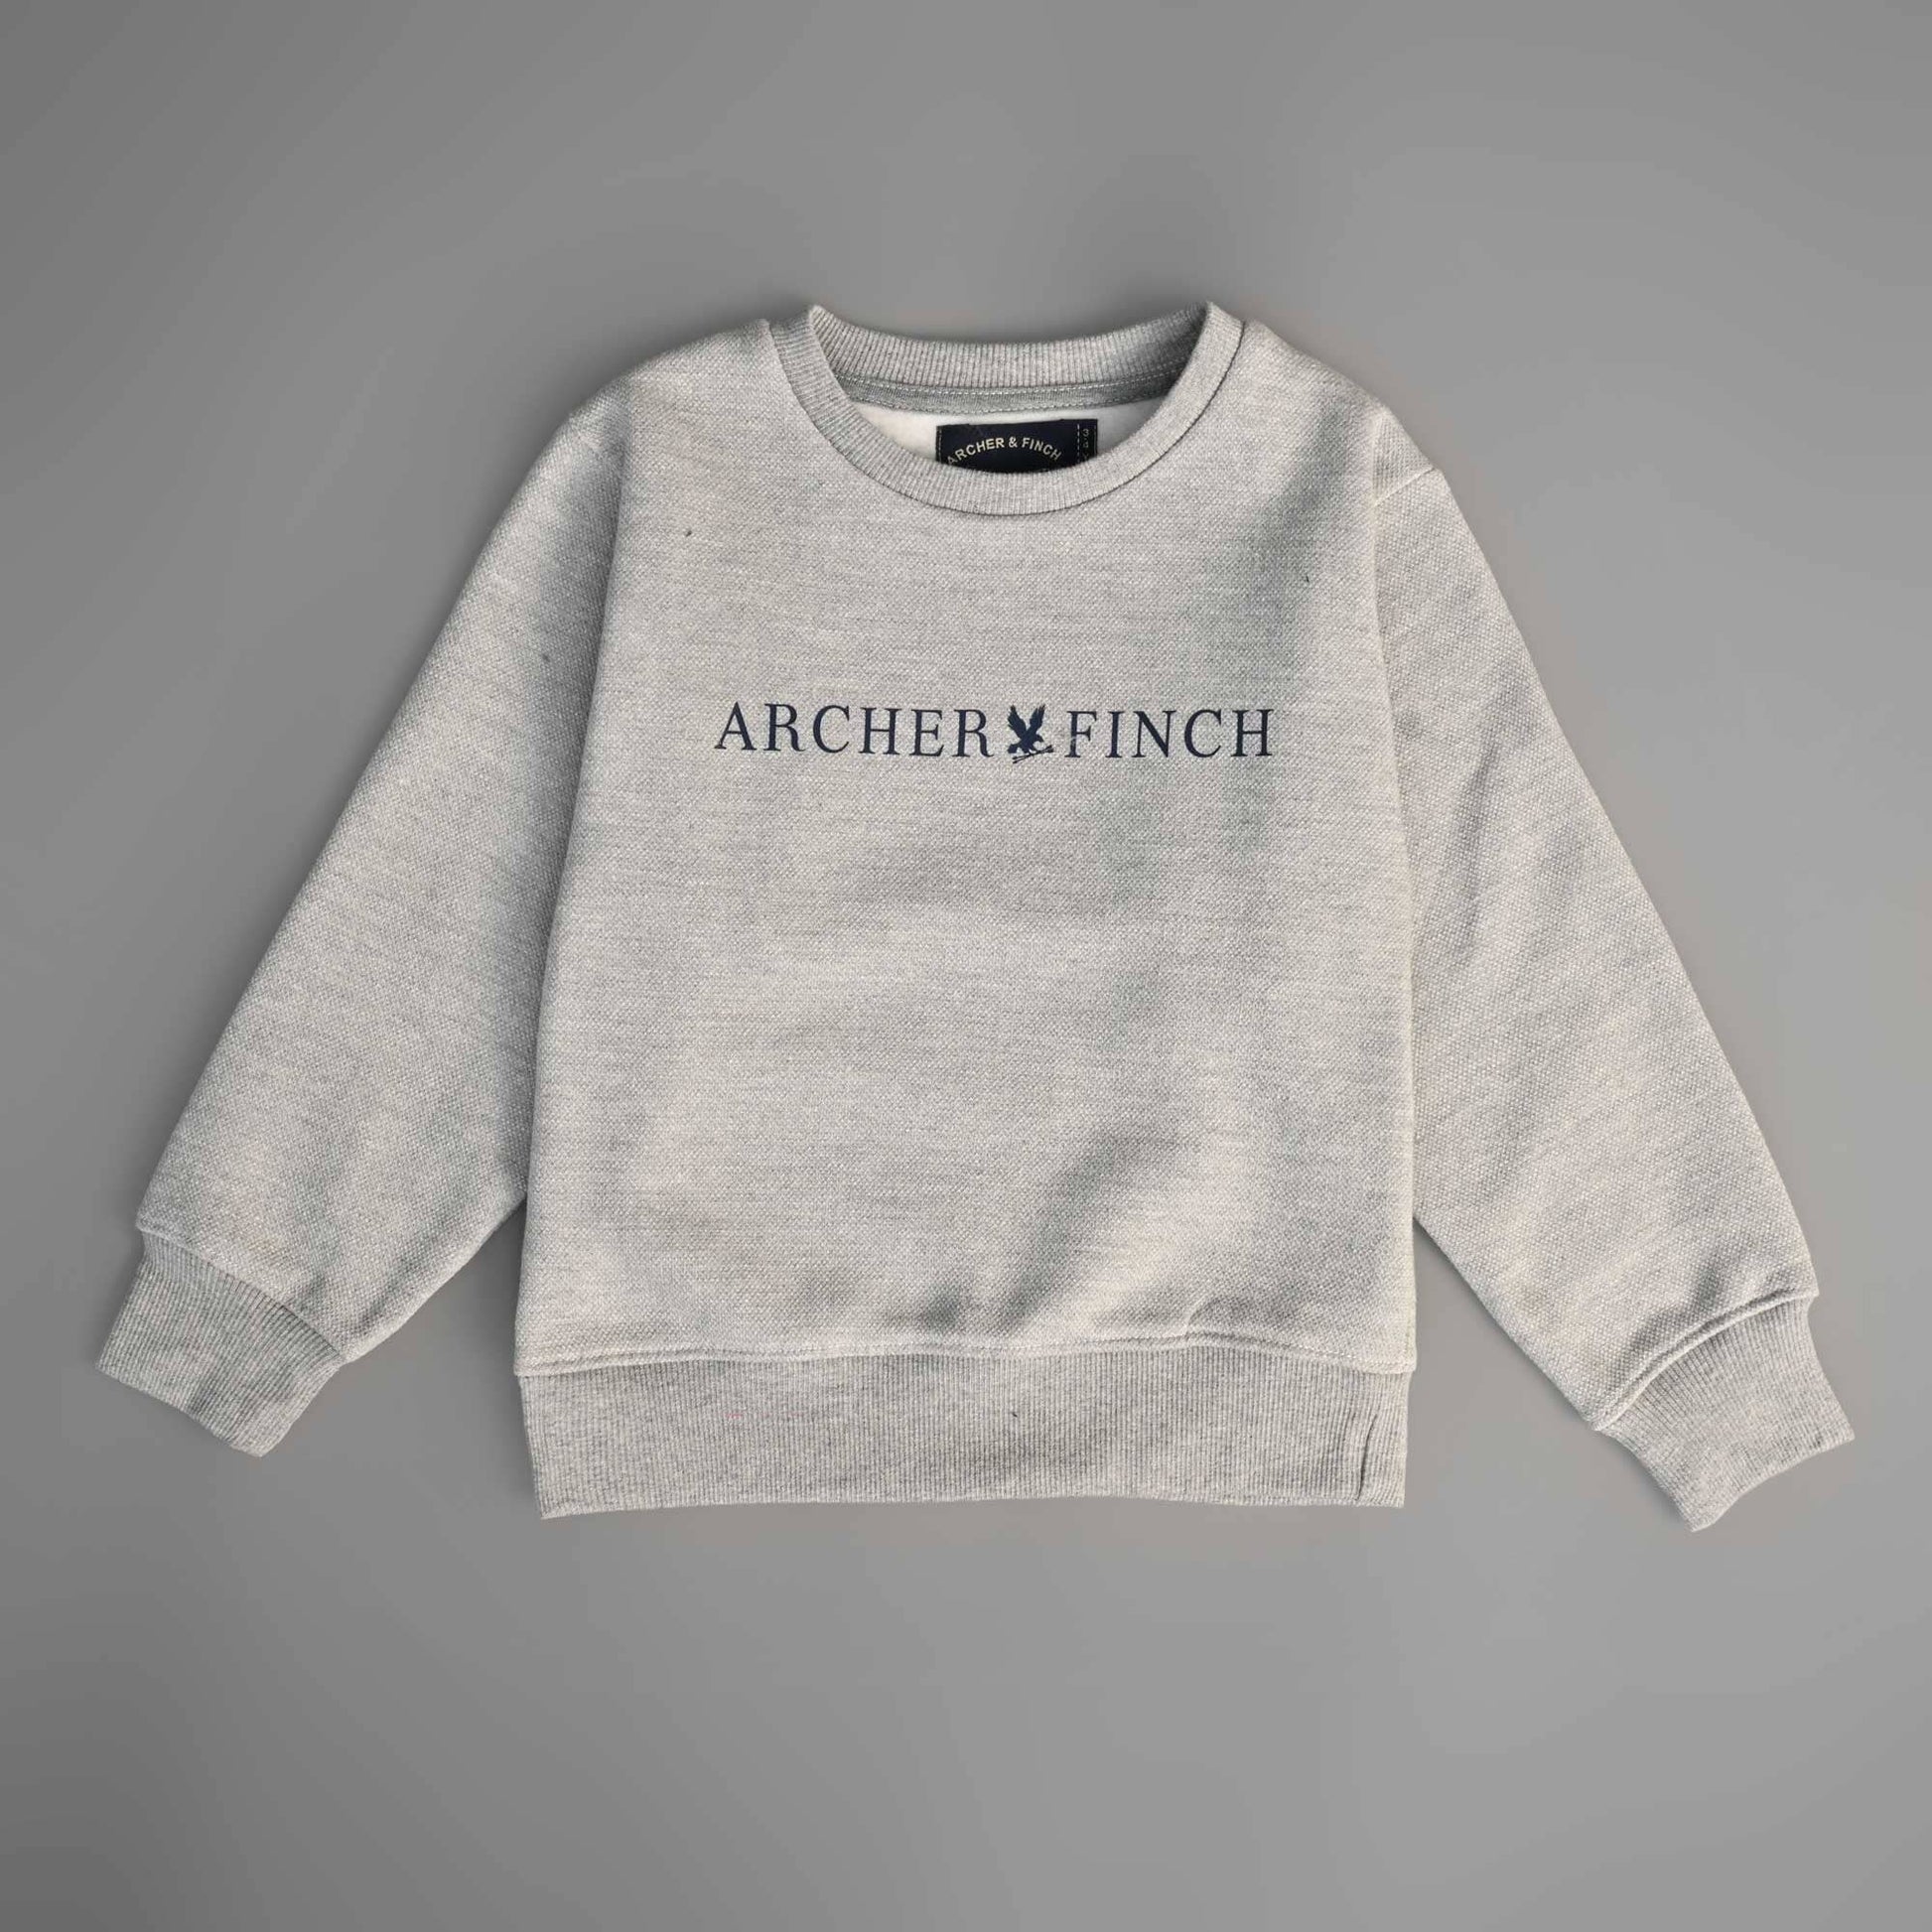 A&F Boy's Archer & Finch Printed Fleece Sweat Shirt Boy's Sweat Shirt LFS Ash Grey 3-4 Years 